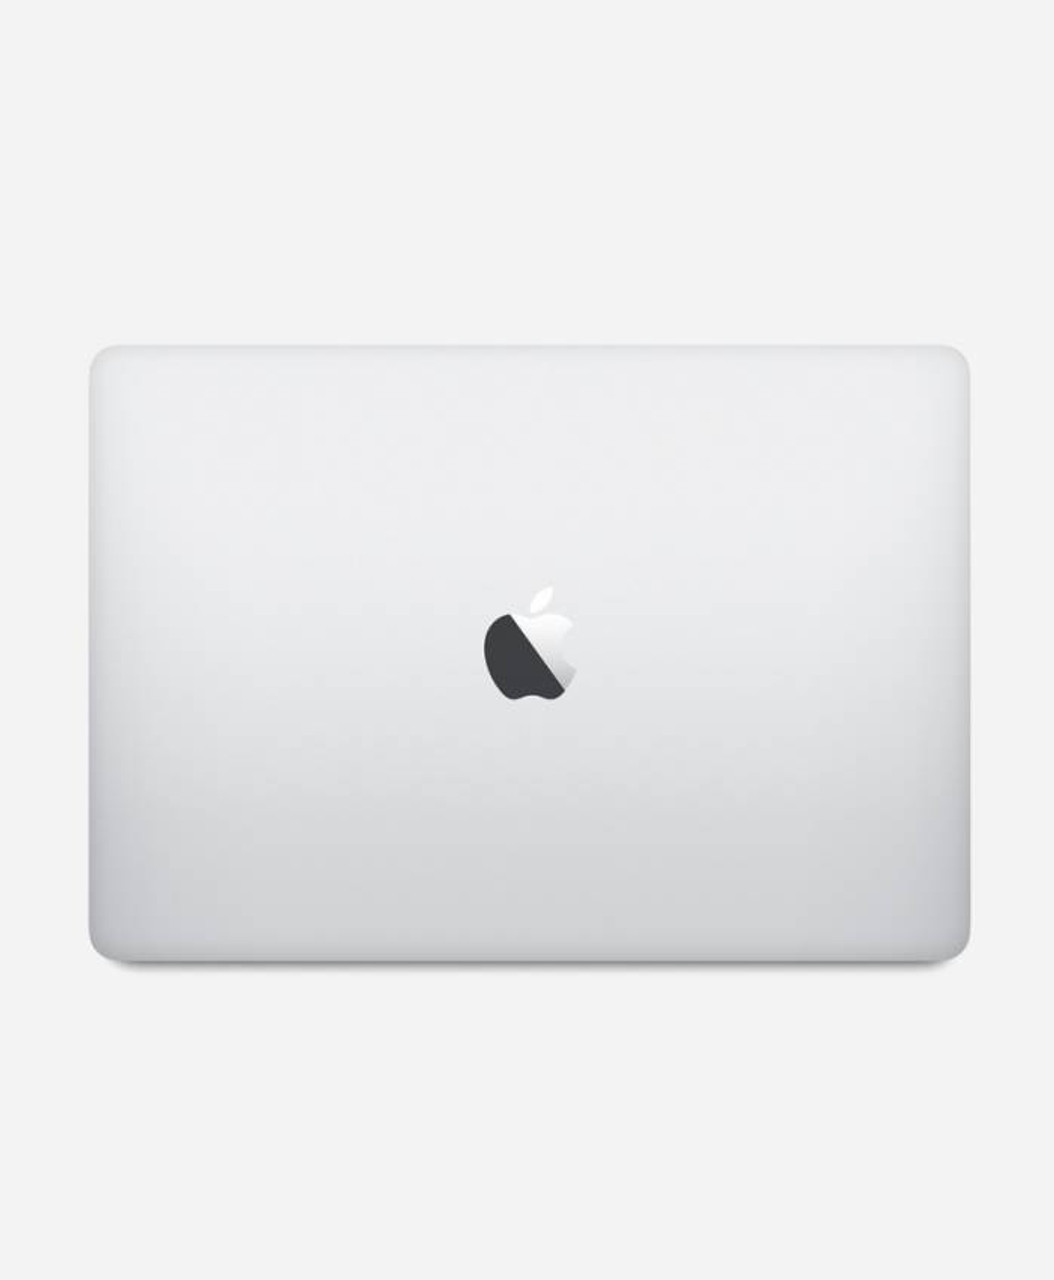 Used Apple Macbook Pro 13.3-inch (Retina, Silver) 2.3Ghz Dual Core 